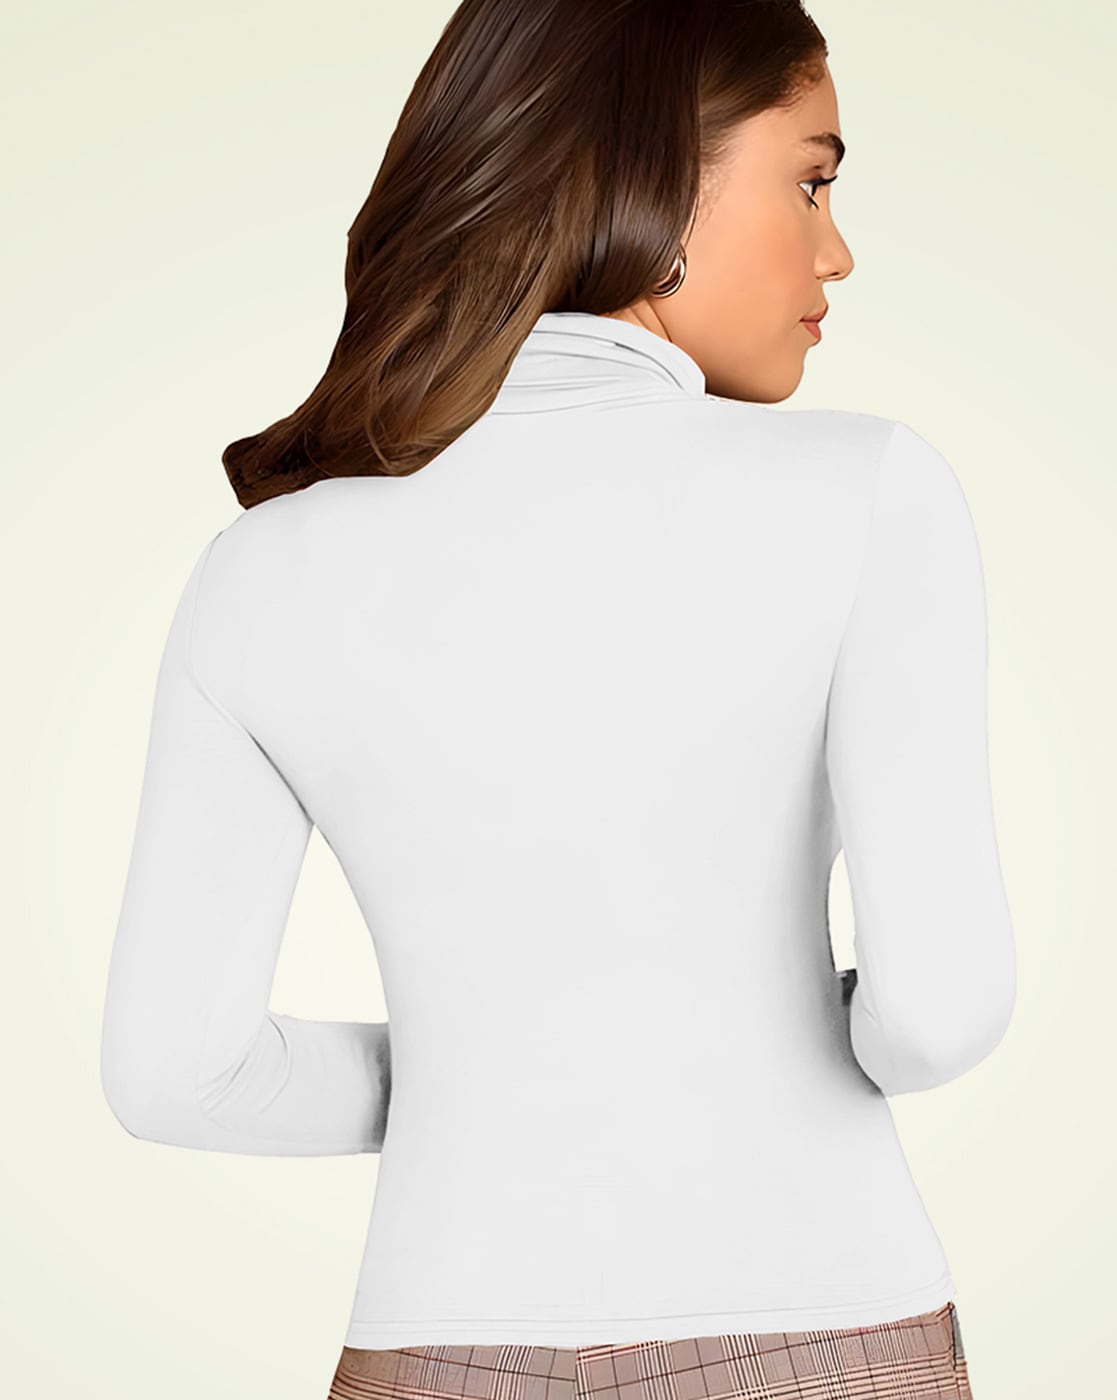 Buy White Tops for Women by AUSK Online